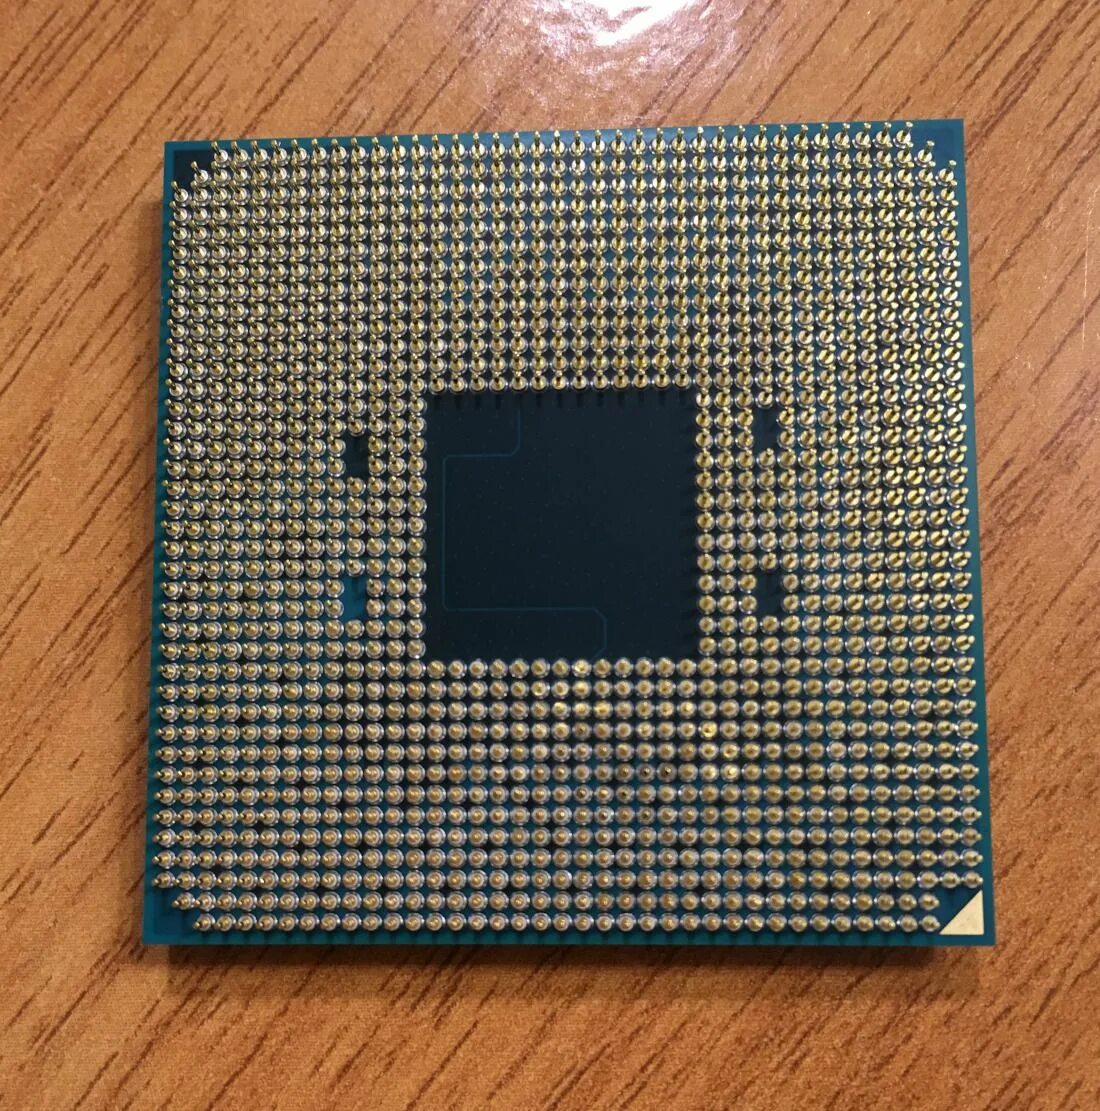 Amd ryzen 5 3400g am4. AMD Ryzen 5 3400g. Процессор AMD Ryzen 5 3400g OEM. Процессор АМД райзен 5. AMD Ryzen 3 1200.